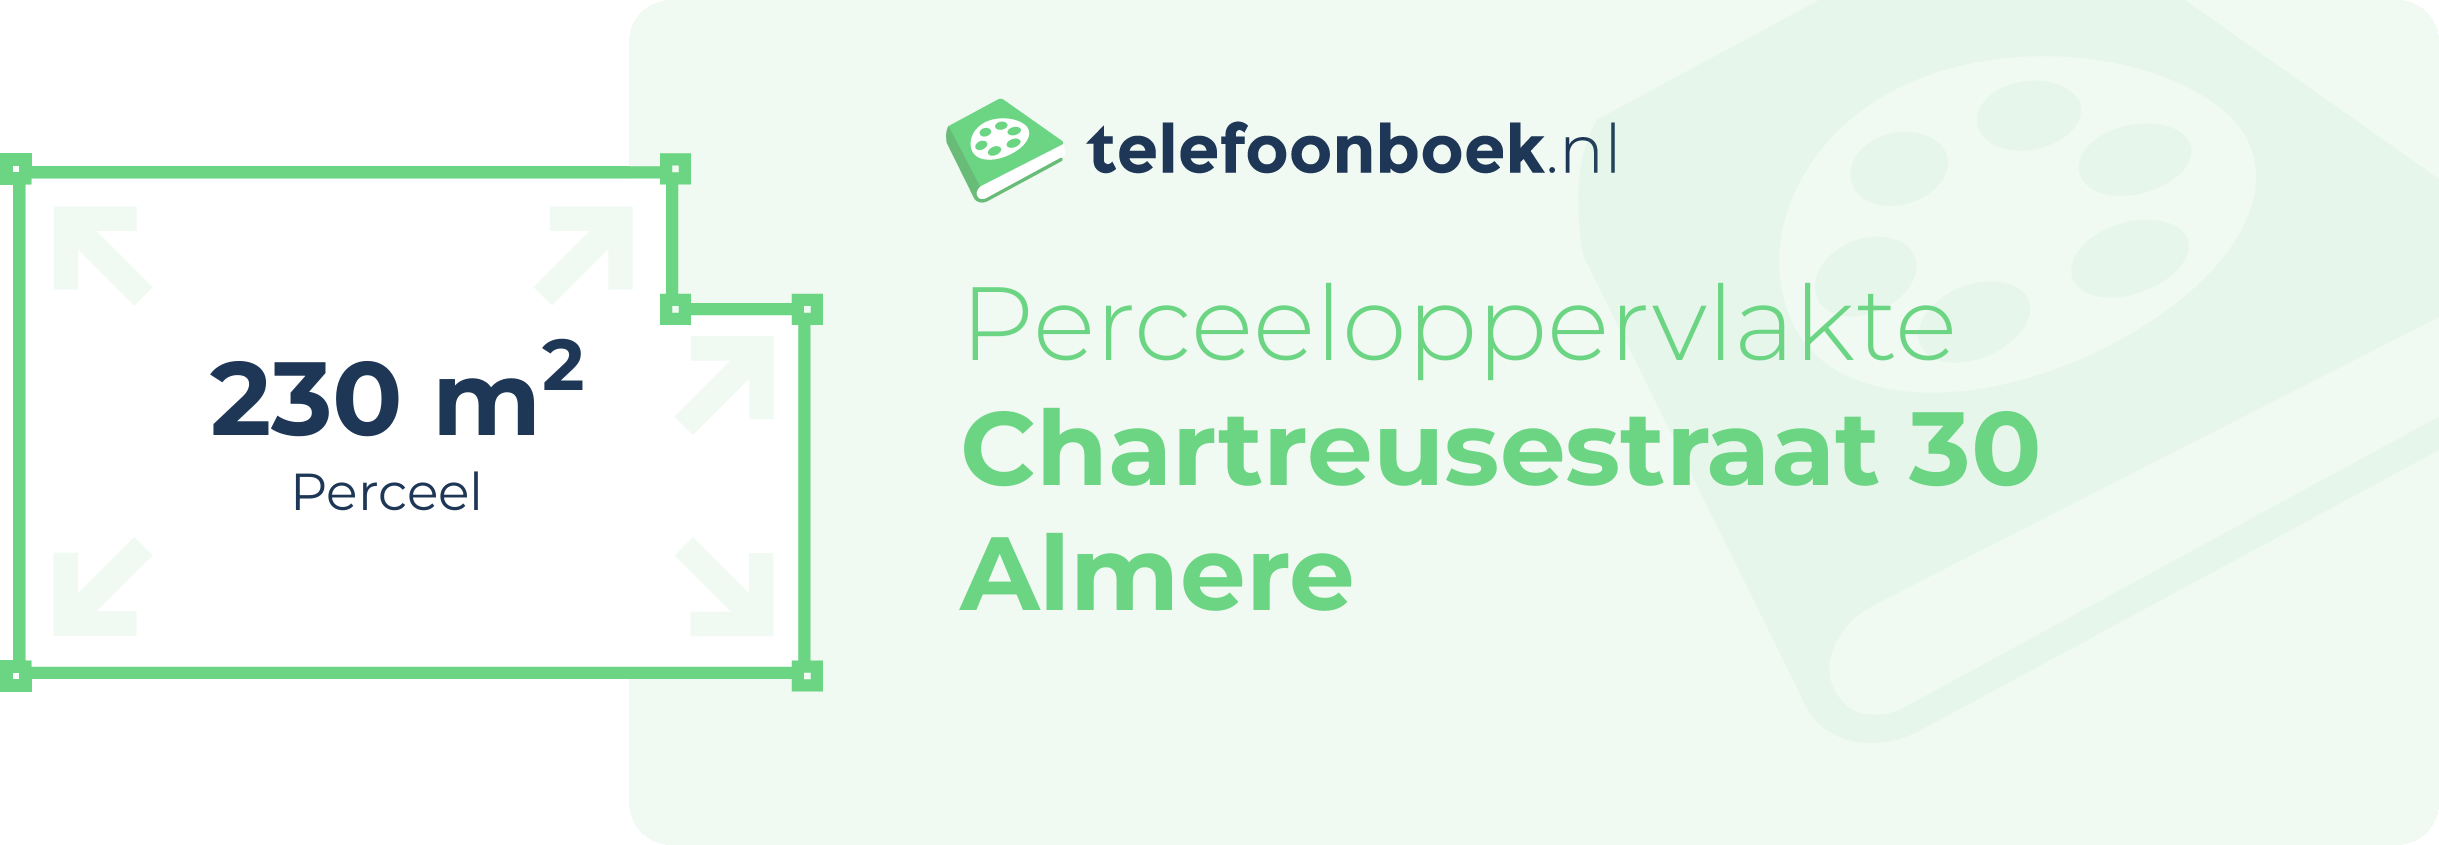 Perceeloppervlakte Chartreusestraat 30 Almere